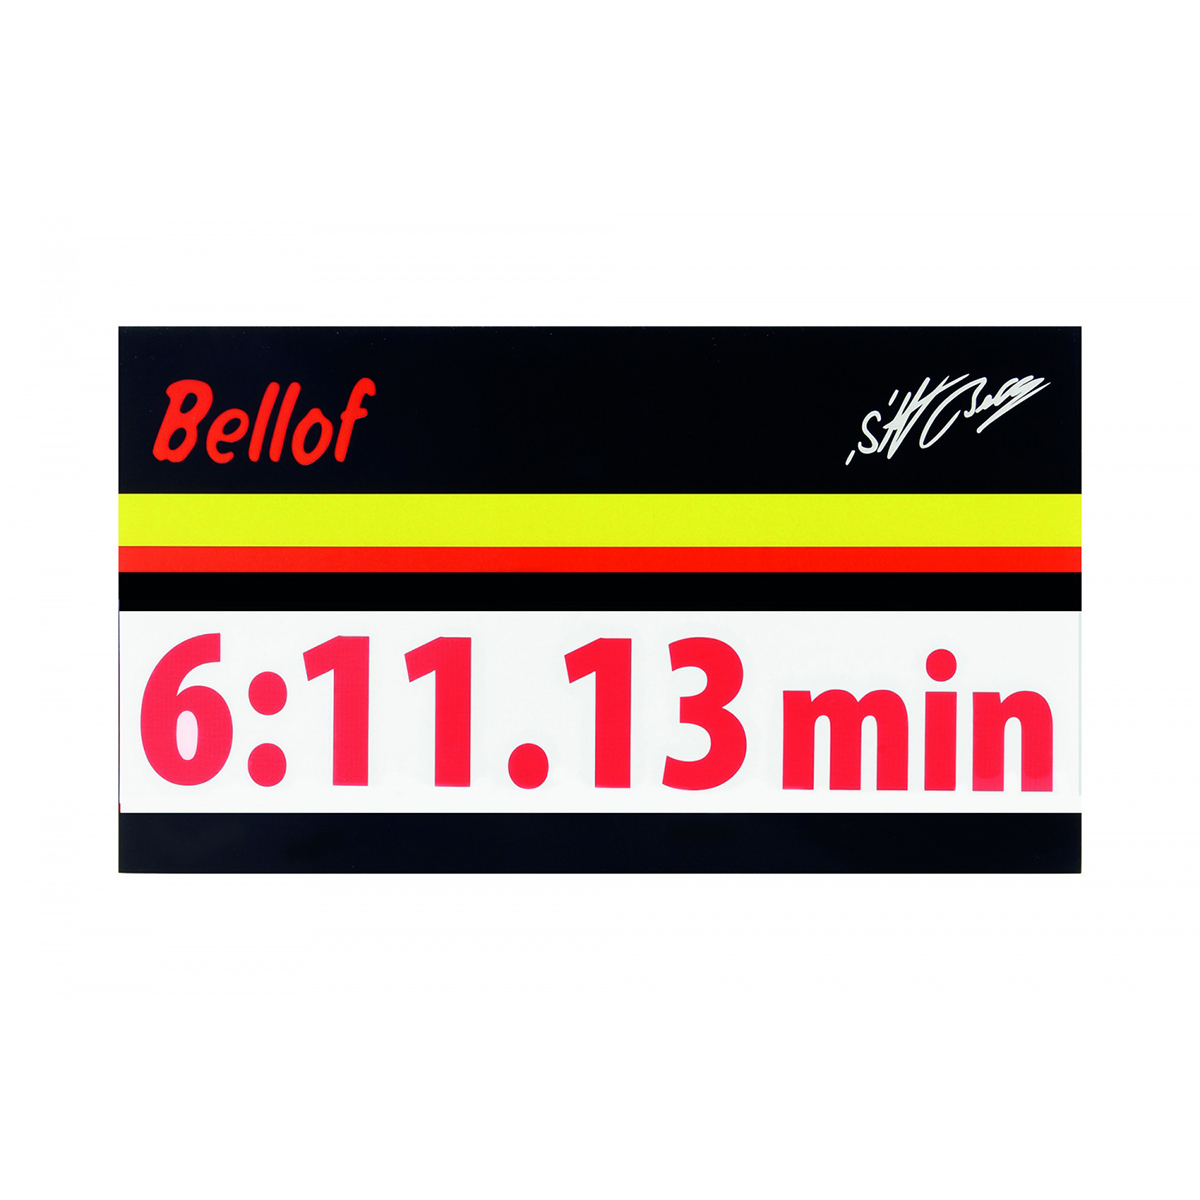 stefan-bellof-aufkleber-rekordrunde-6-1113-min-rot-120-x-25-mm